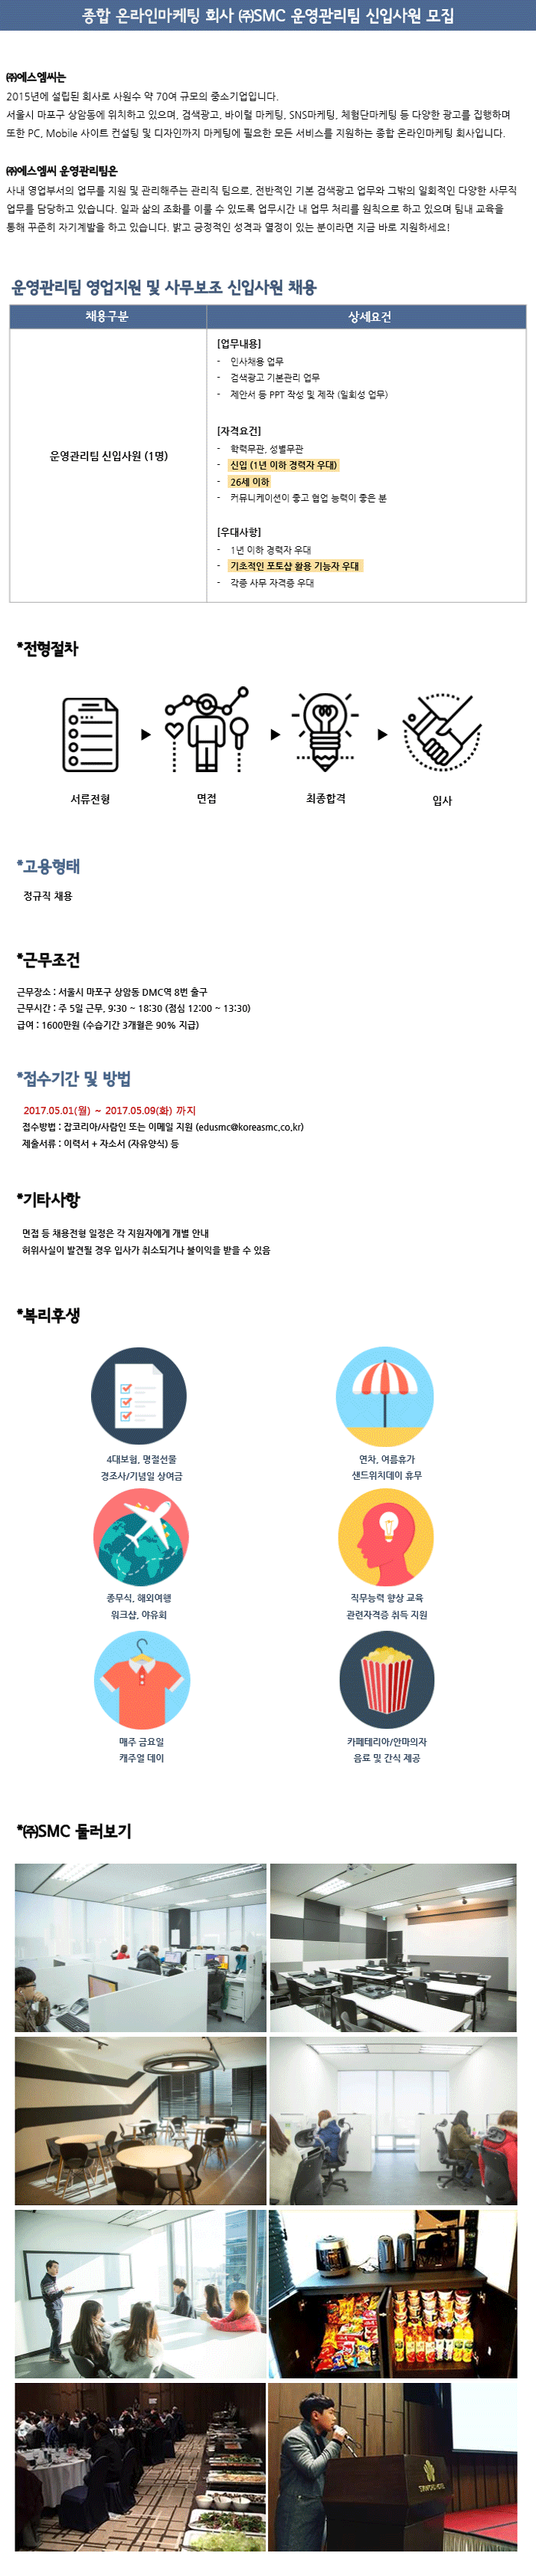 2017 ㈜SMC 운영관리팀 신입사원 모집